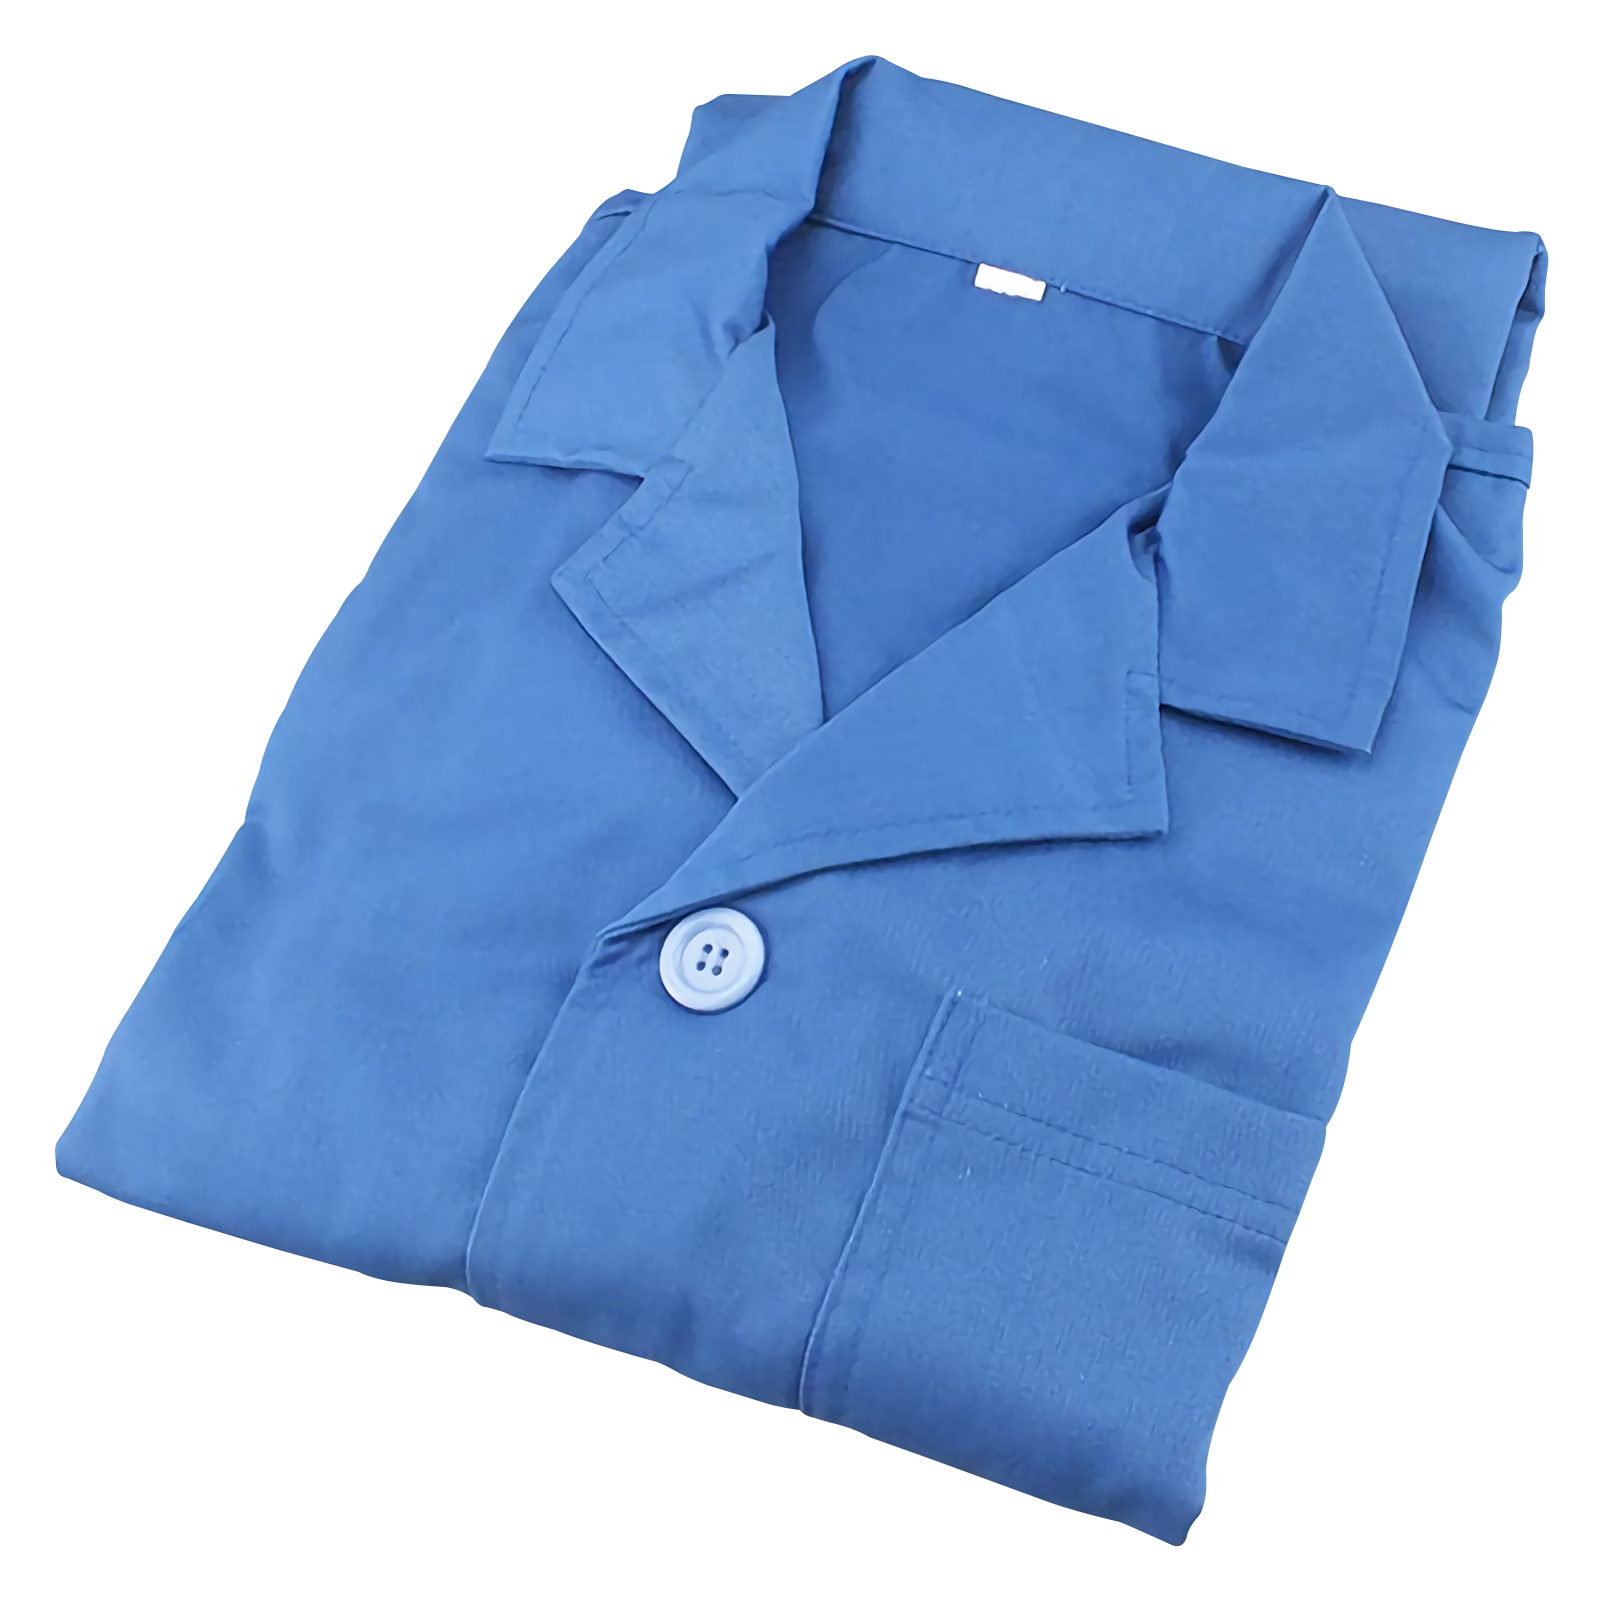 ADAMAS BETA Lab Coat Polyester Cotton Thin/Thick Style Single Breasted Long Sleeve Adult Nurse Uniform White/Blue Laboratory Protective Clothing